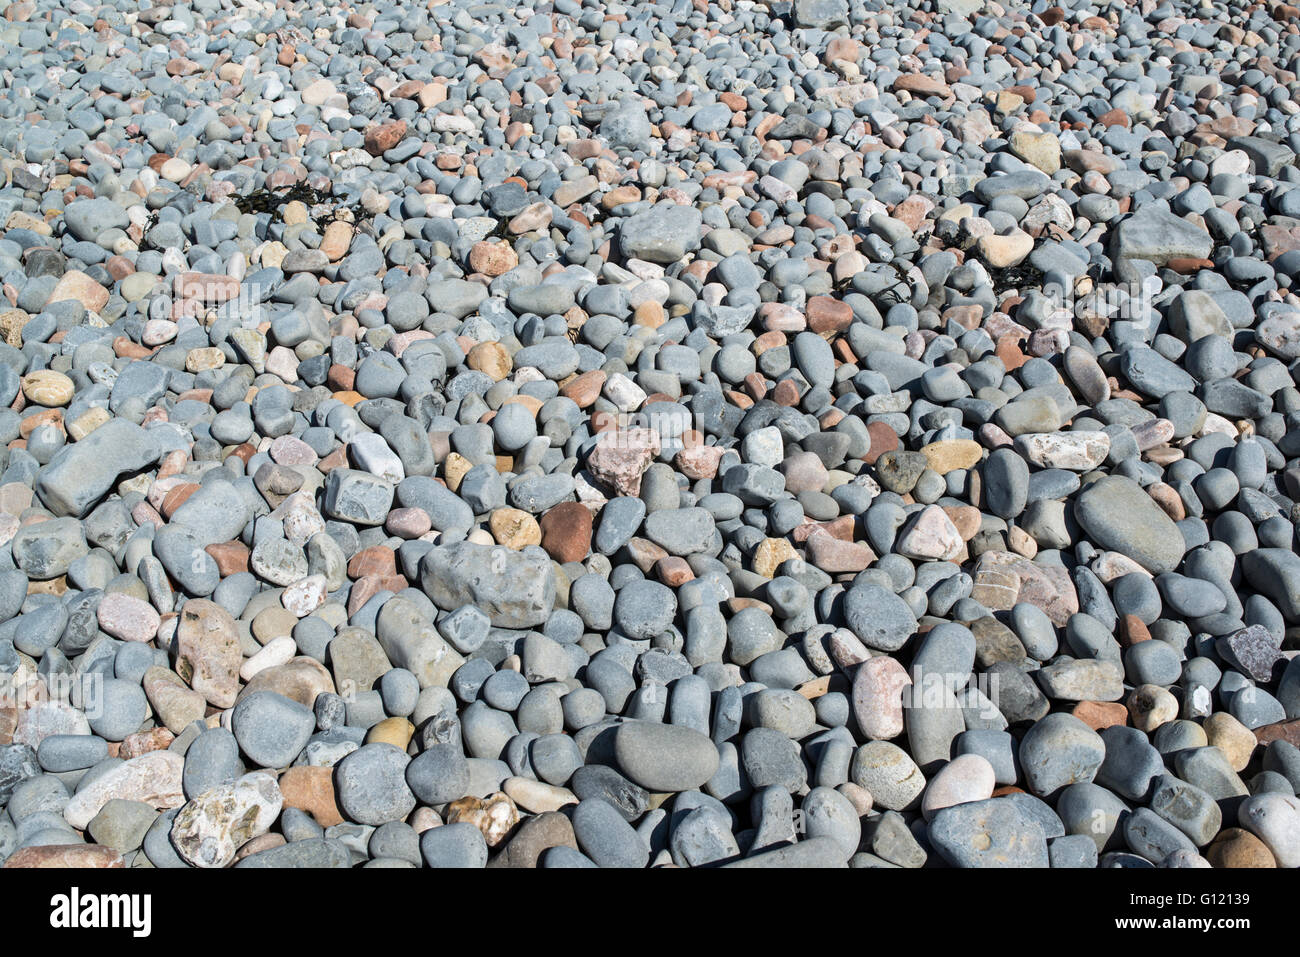 Multi-coloured pebbles on a beach. Stock Photo